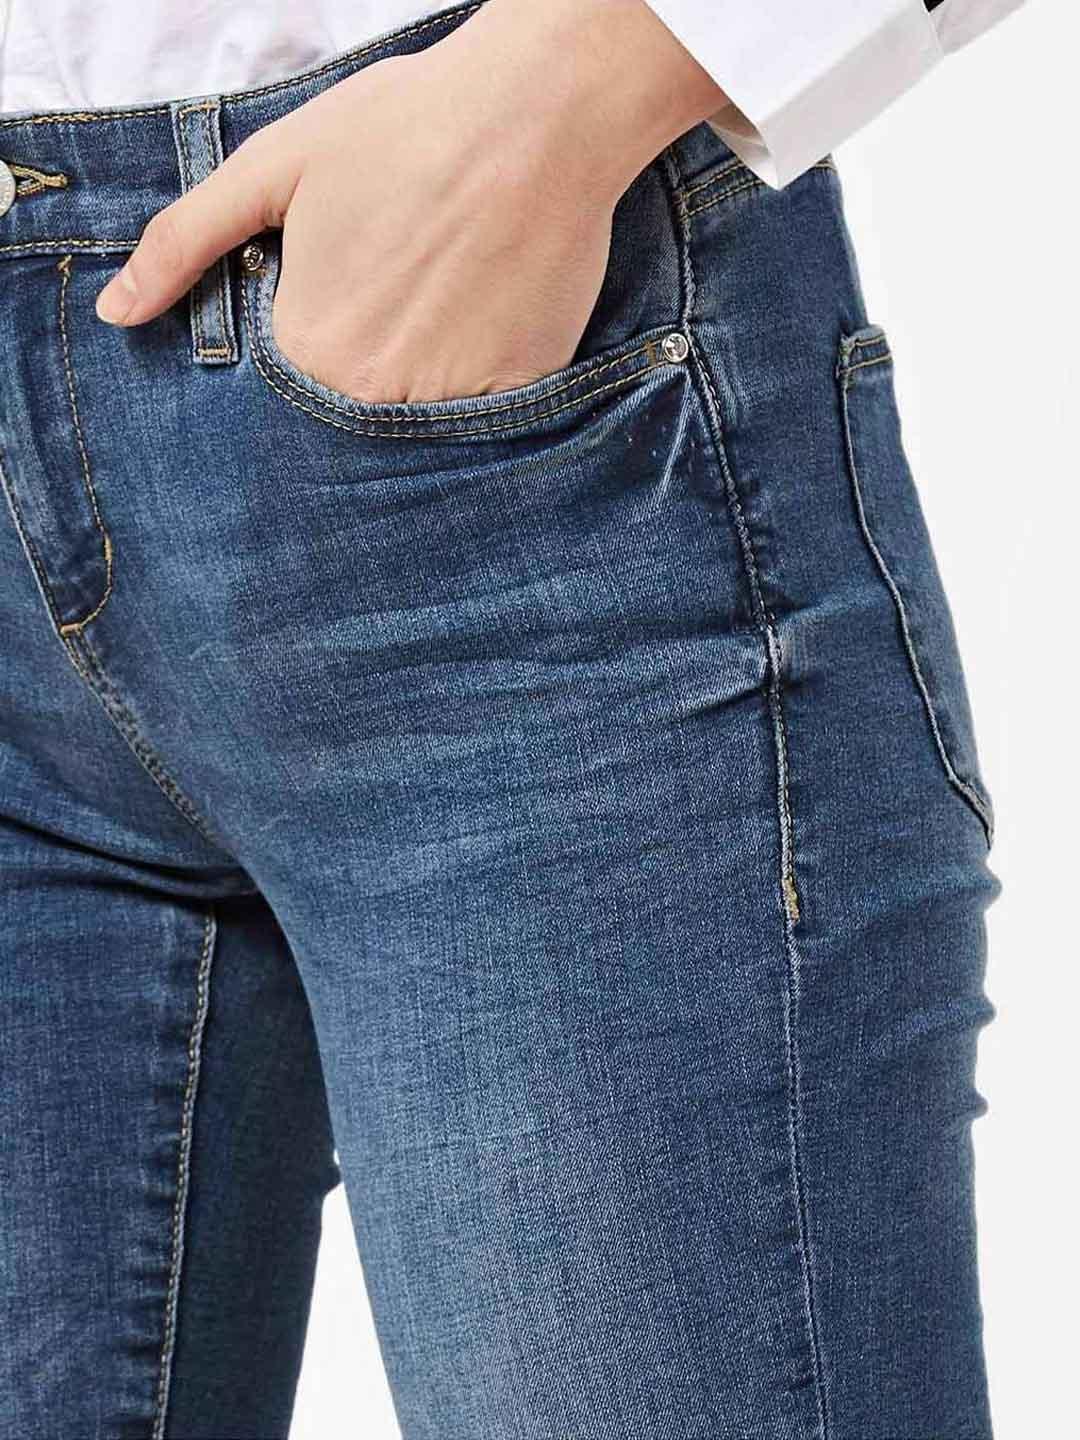 Women's Star mid wash skinny fit jeans